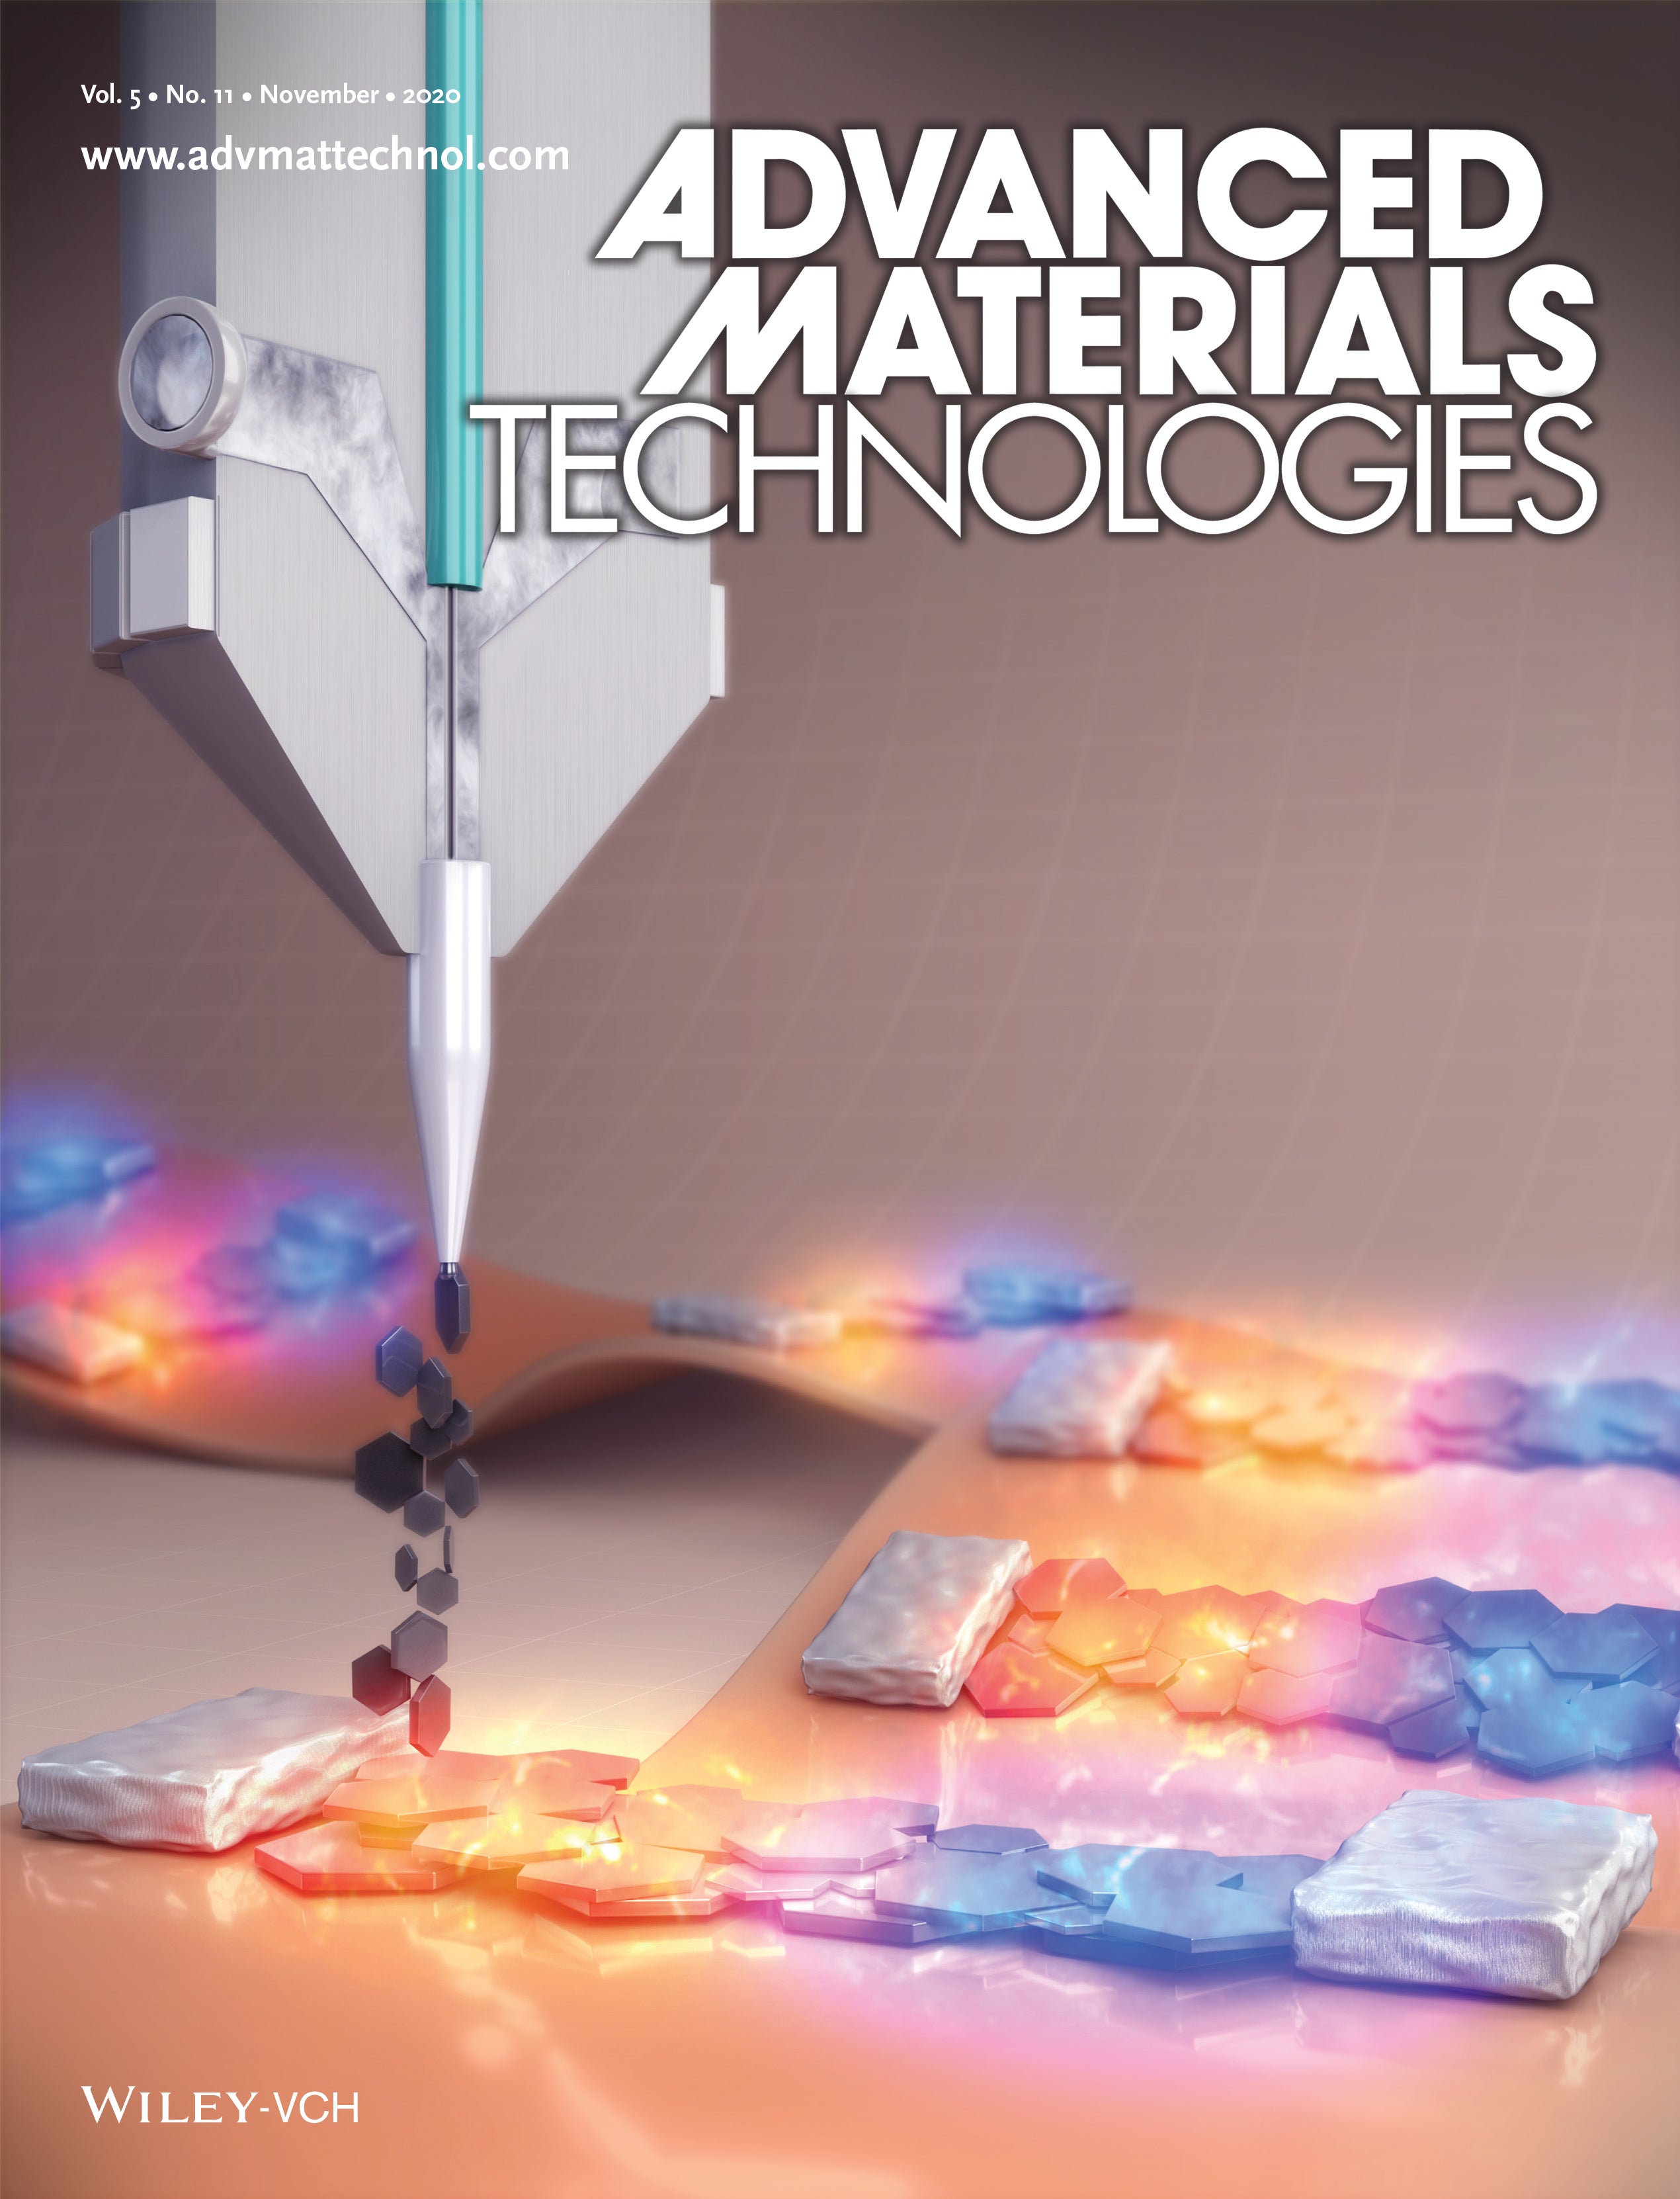 Cover art for Advanced Materials Technology journal, 11/2020